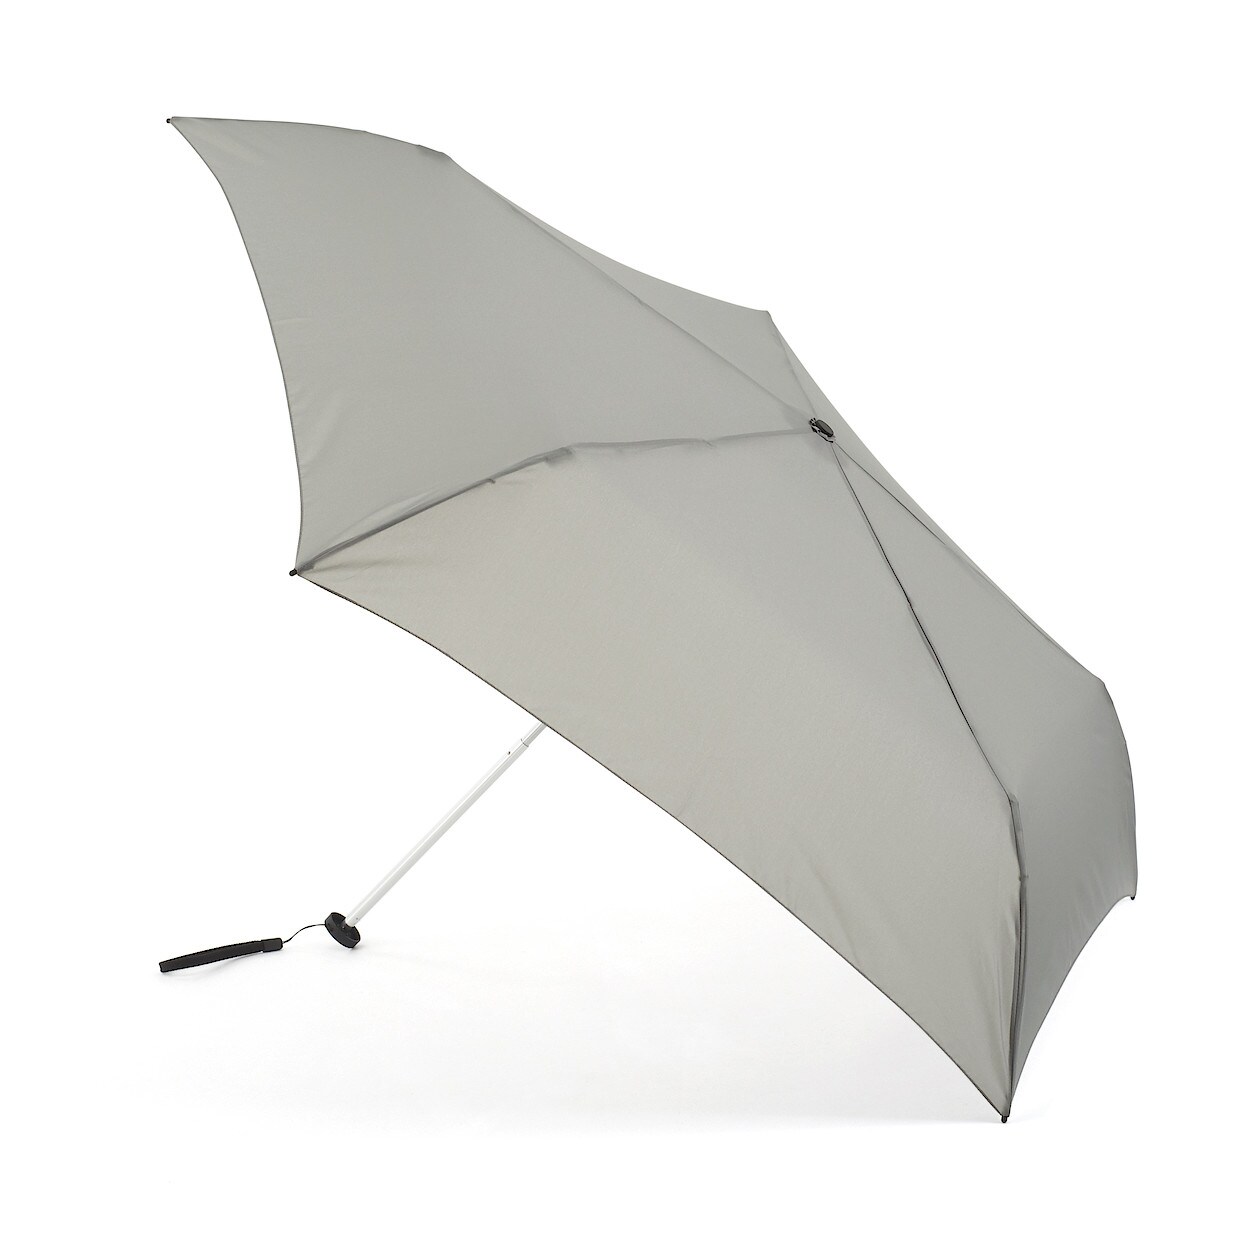 GRAY(경량 · 양산 겸용 접이식 우산)